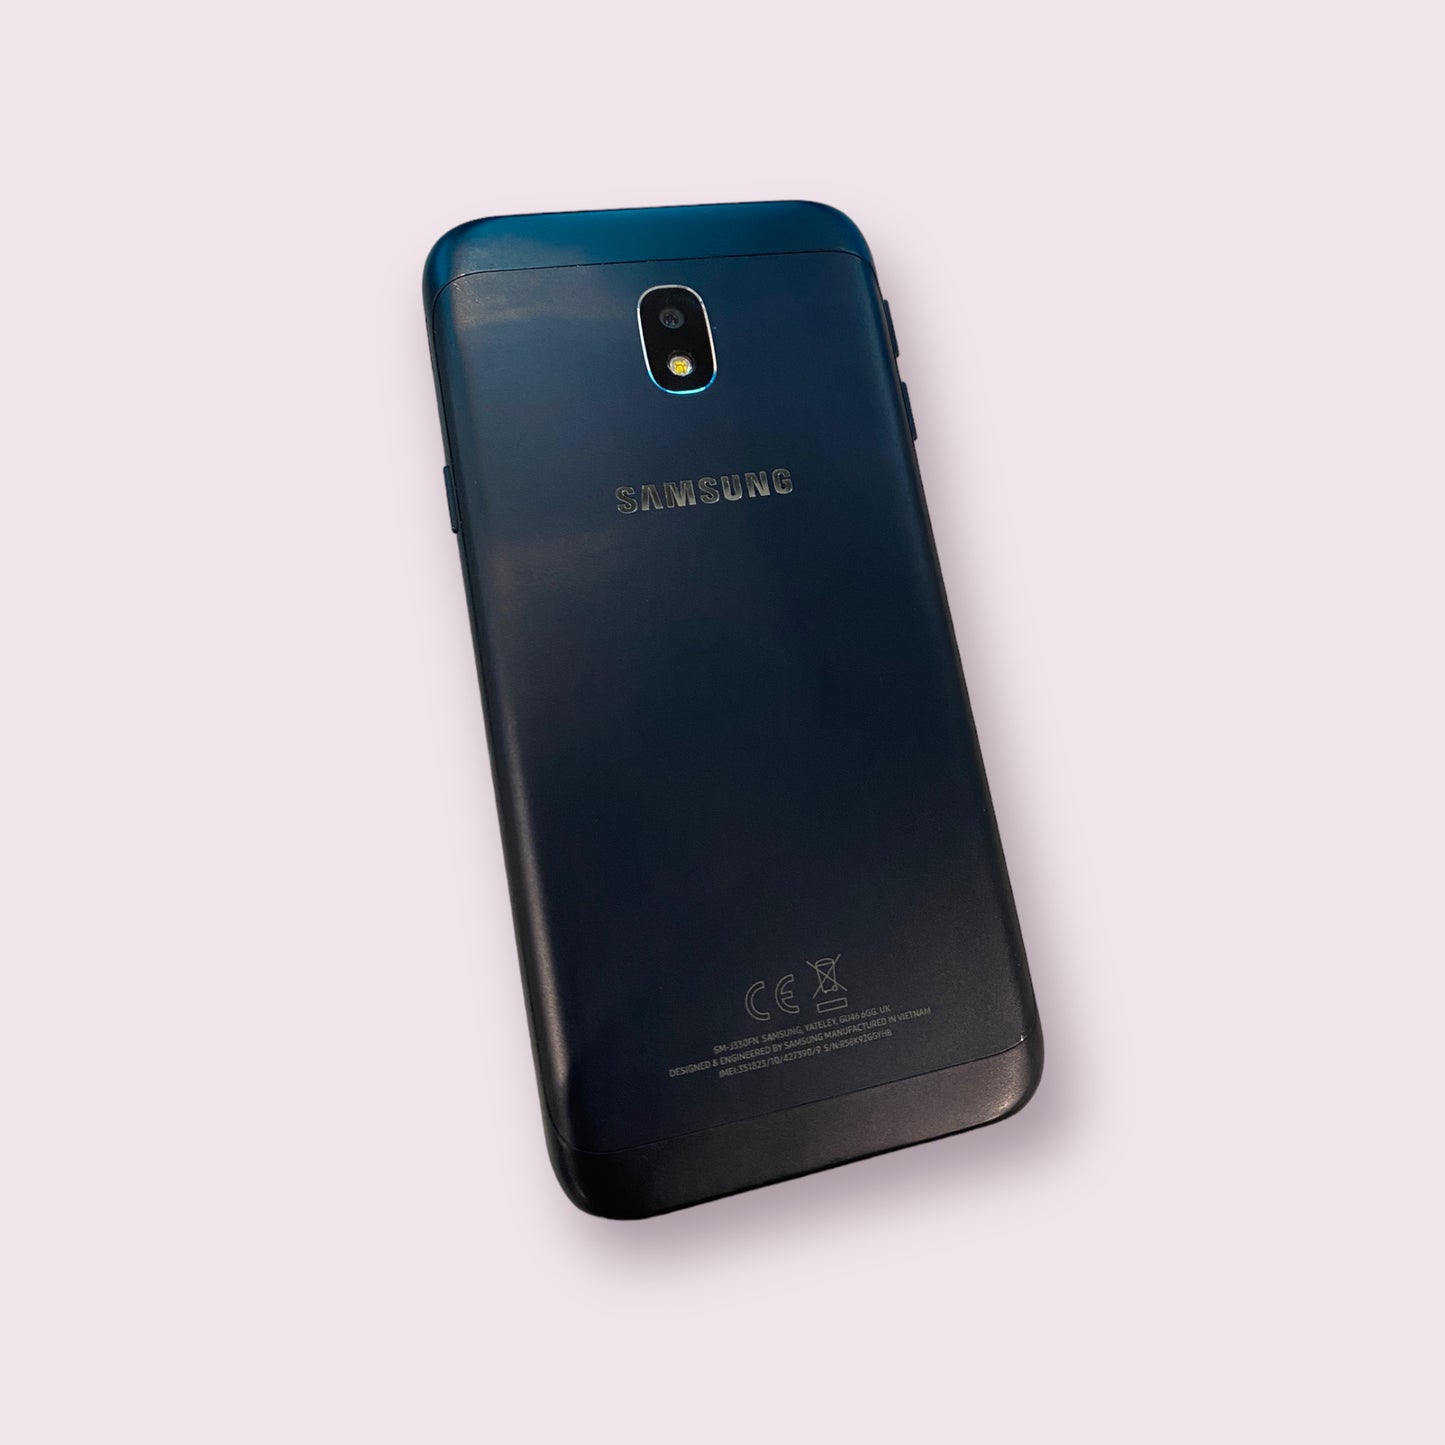 Samsung Galaxy J3 2017 SM-J330F 16GB Black - Unlocked - Grade B